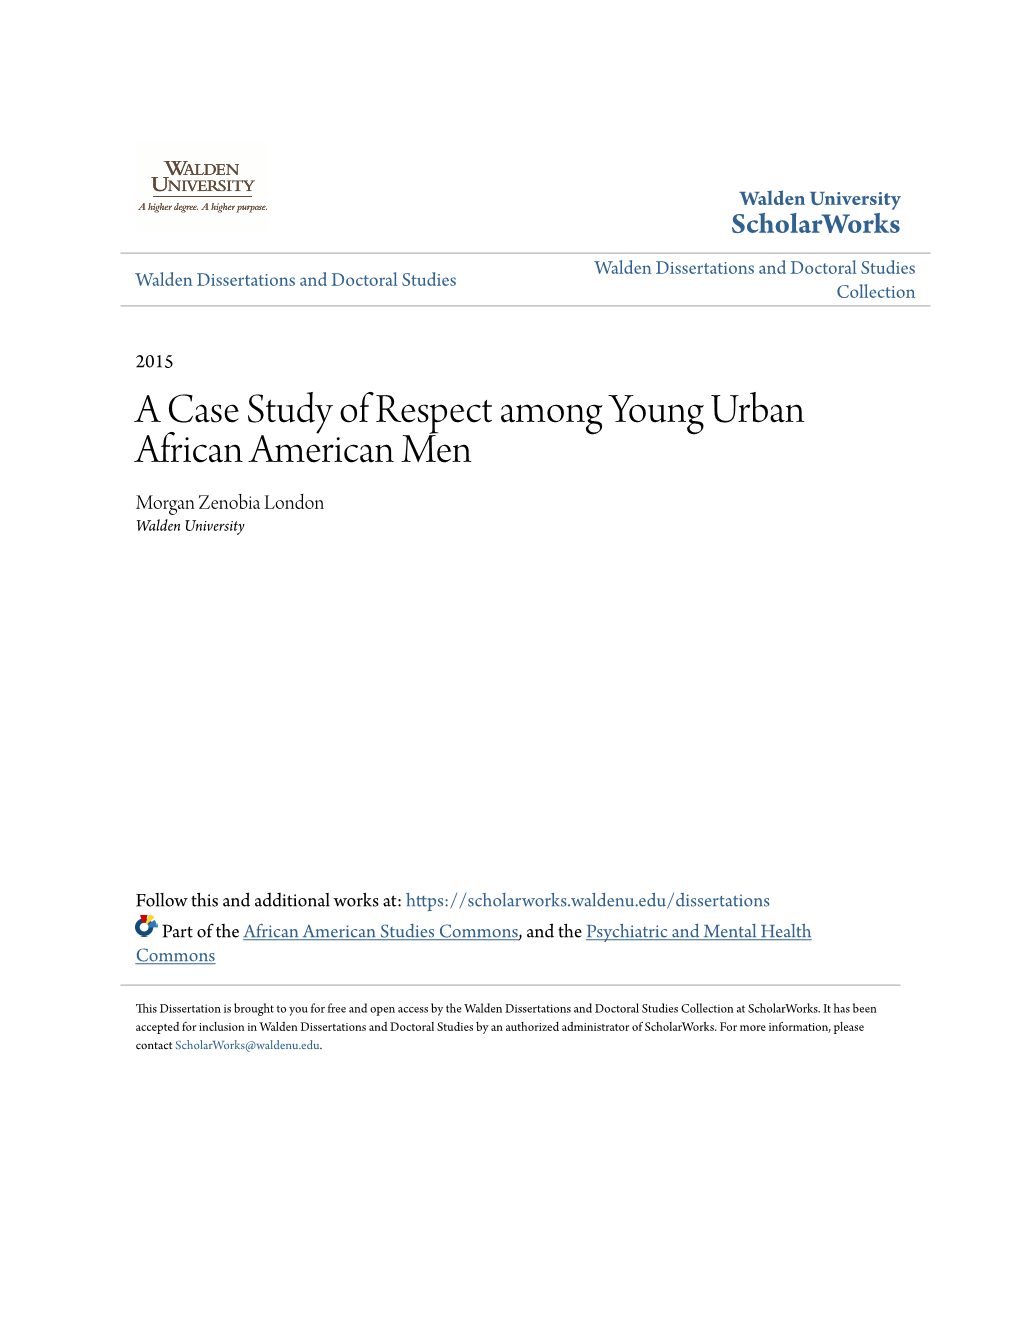 A Case Study of Respect Among Young Urban African American Men Morgan Zenobia London Walden University